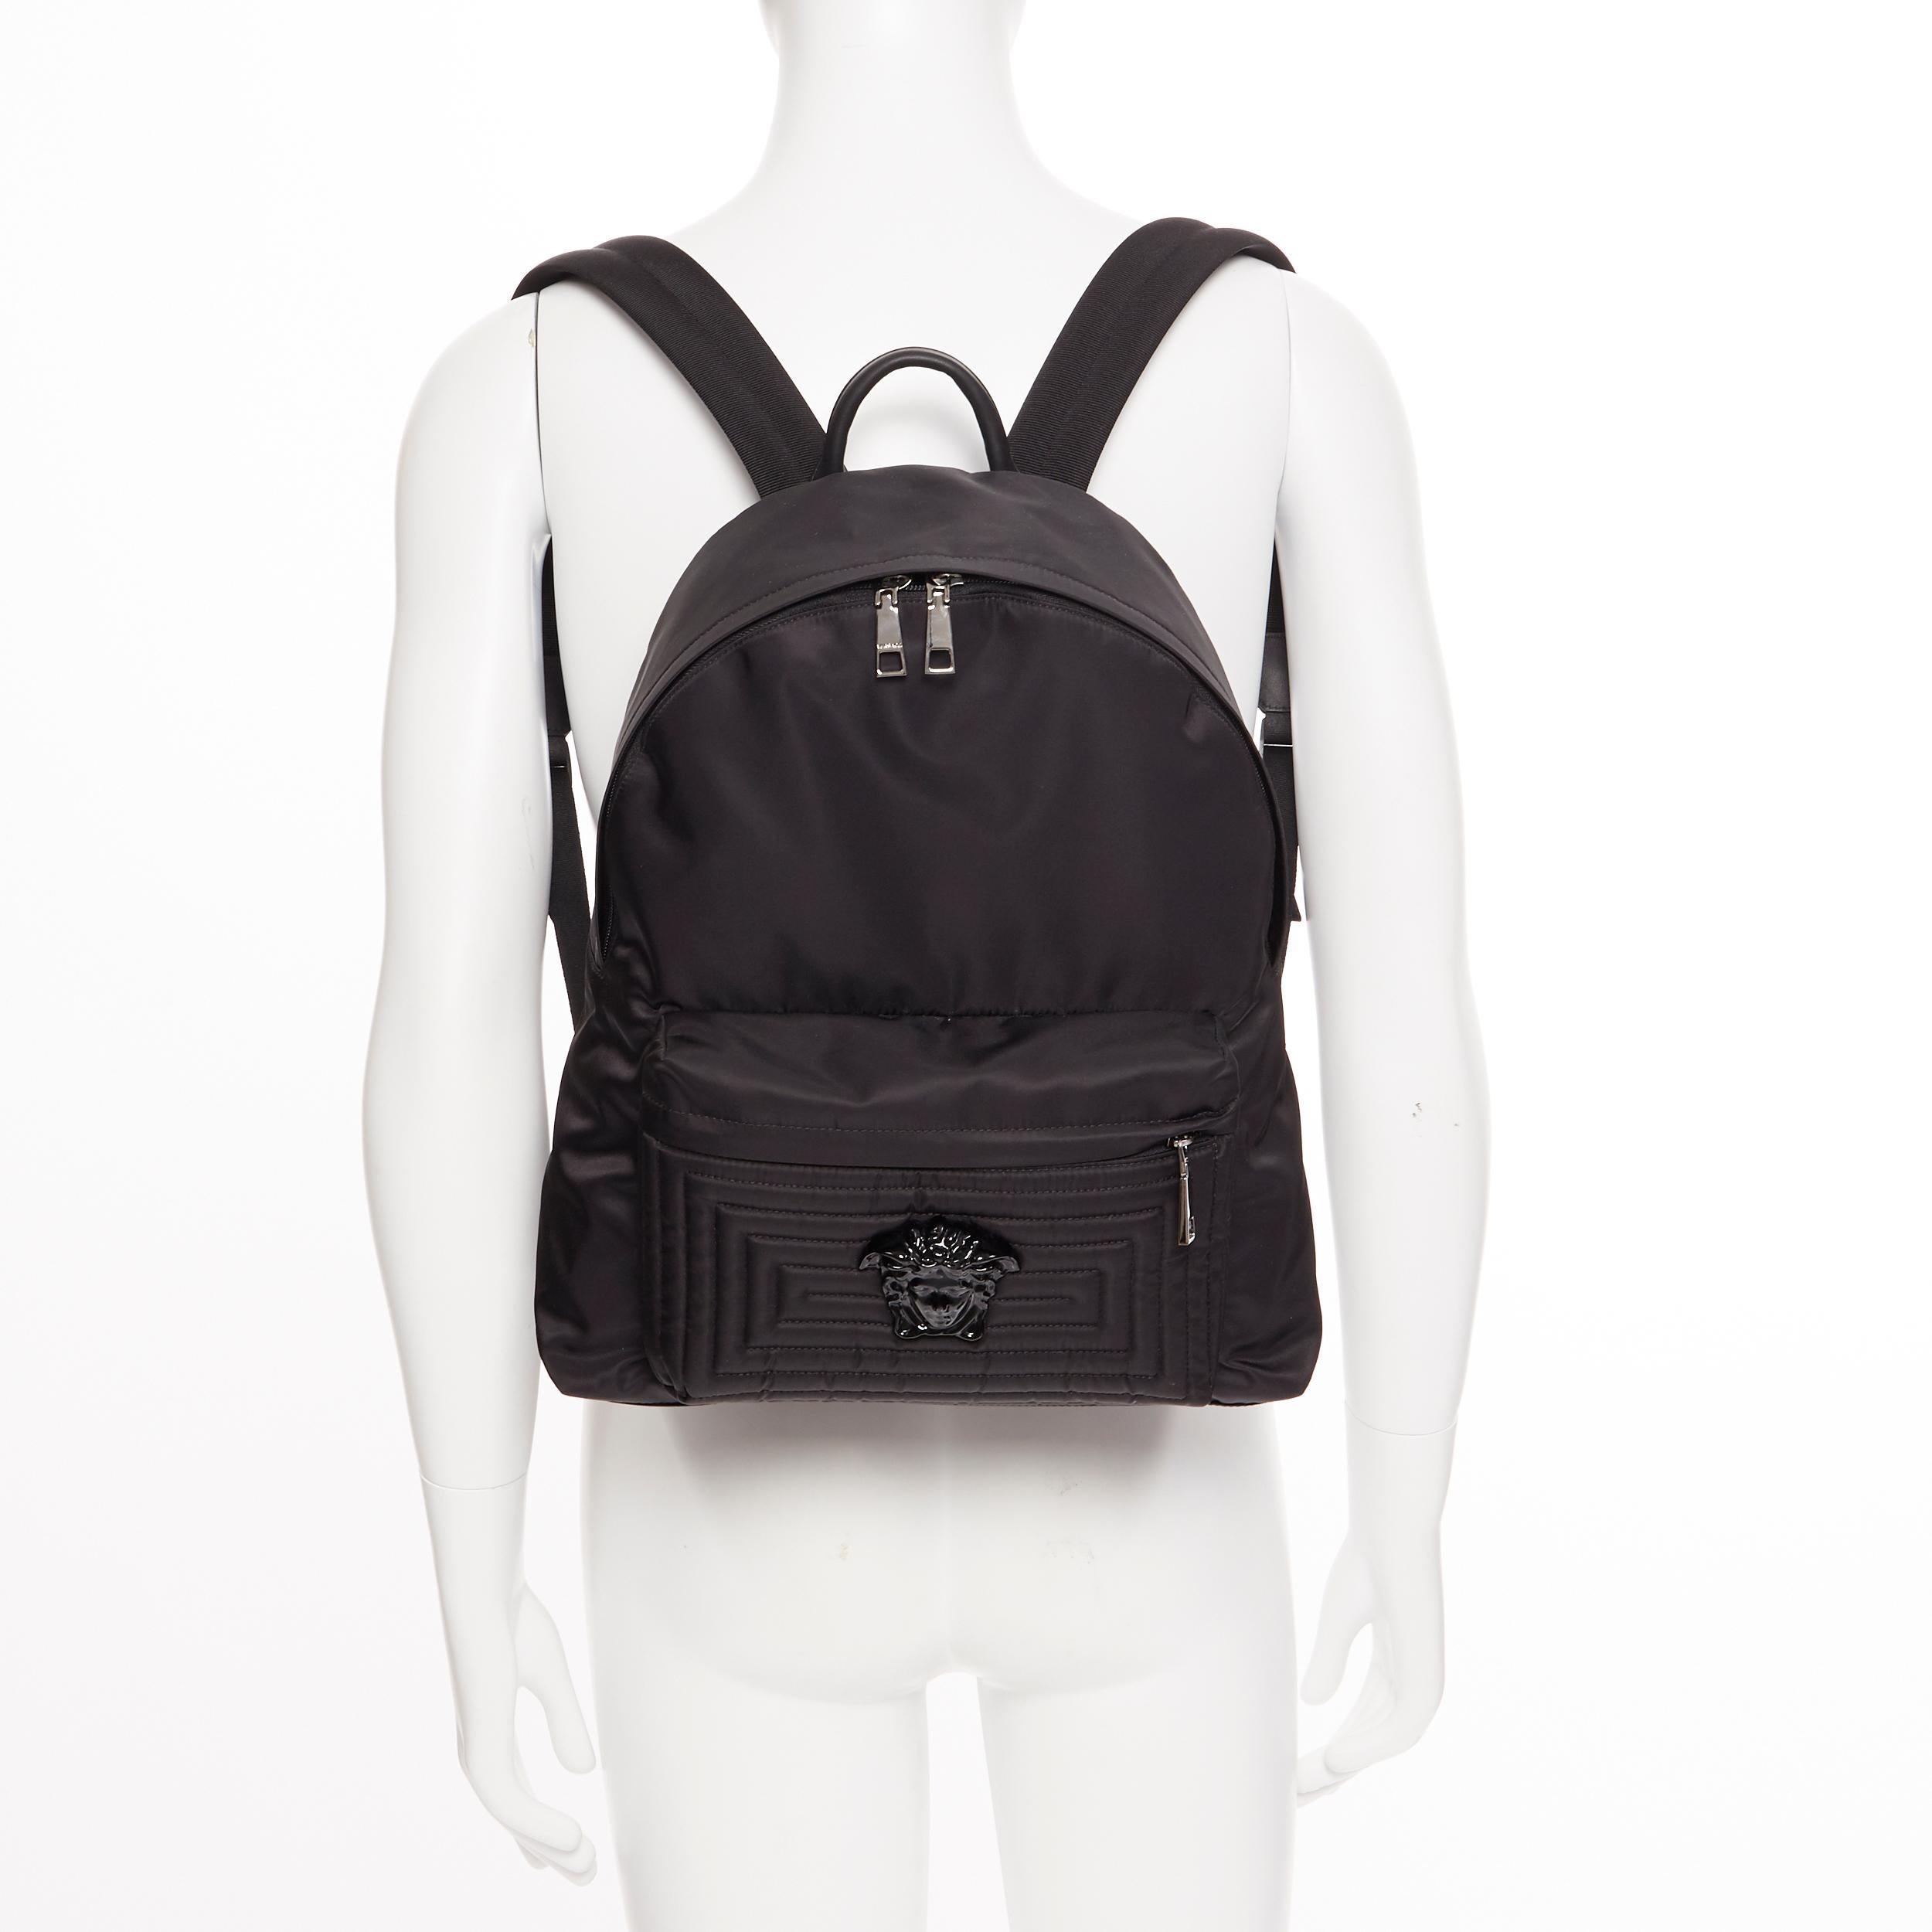 new VERSACE black Palazzo Medusa Greca nylon stitching pocket backpack bag
Brand: Versace
Designer: Donatella Versace
Model Name / Style: Medusa backpack
Material: Nylon
Color: Black
Pattern: Solid
Closure: Zip
Extra Detail: Black nylon fabric